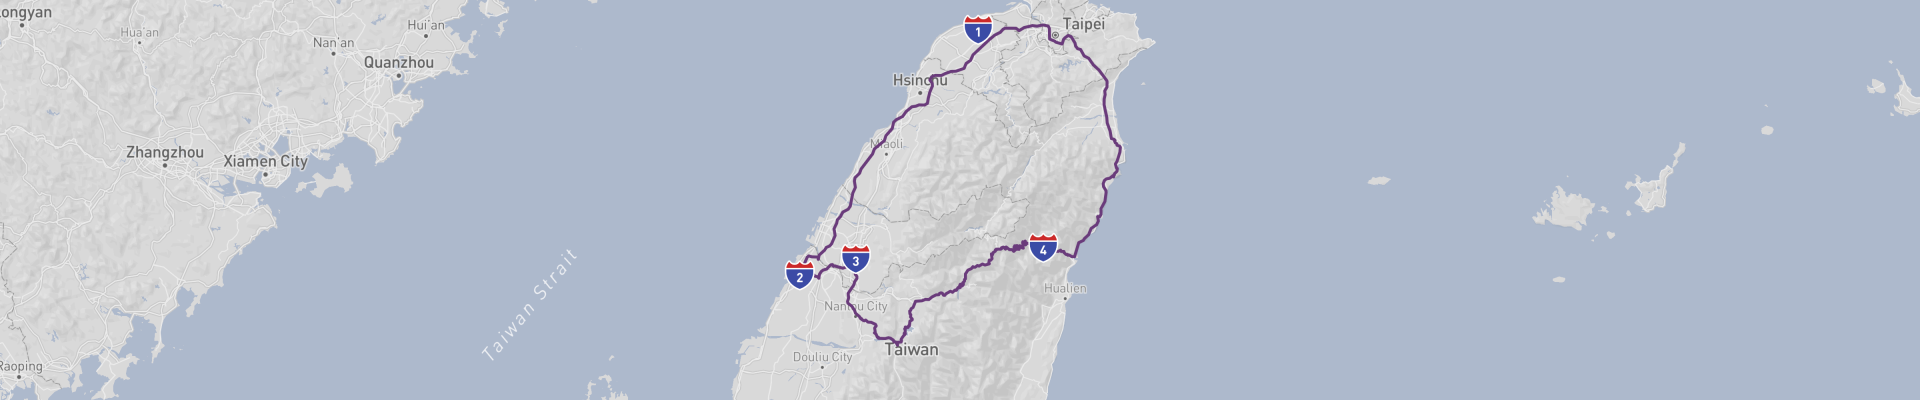 Taiwan Highlights Road Trip